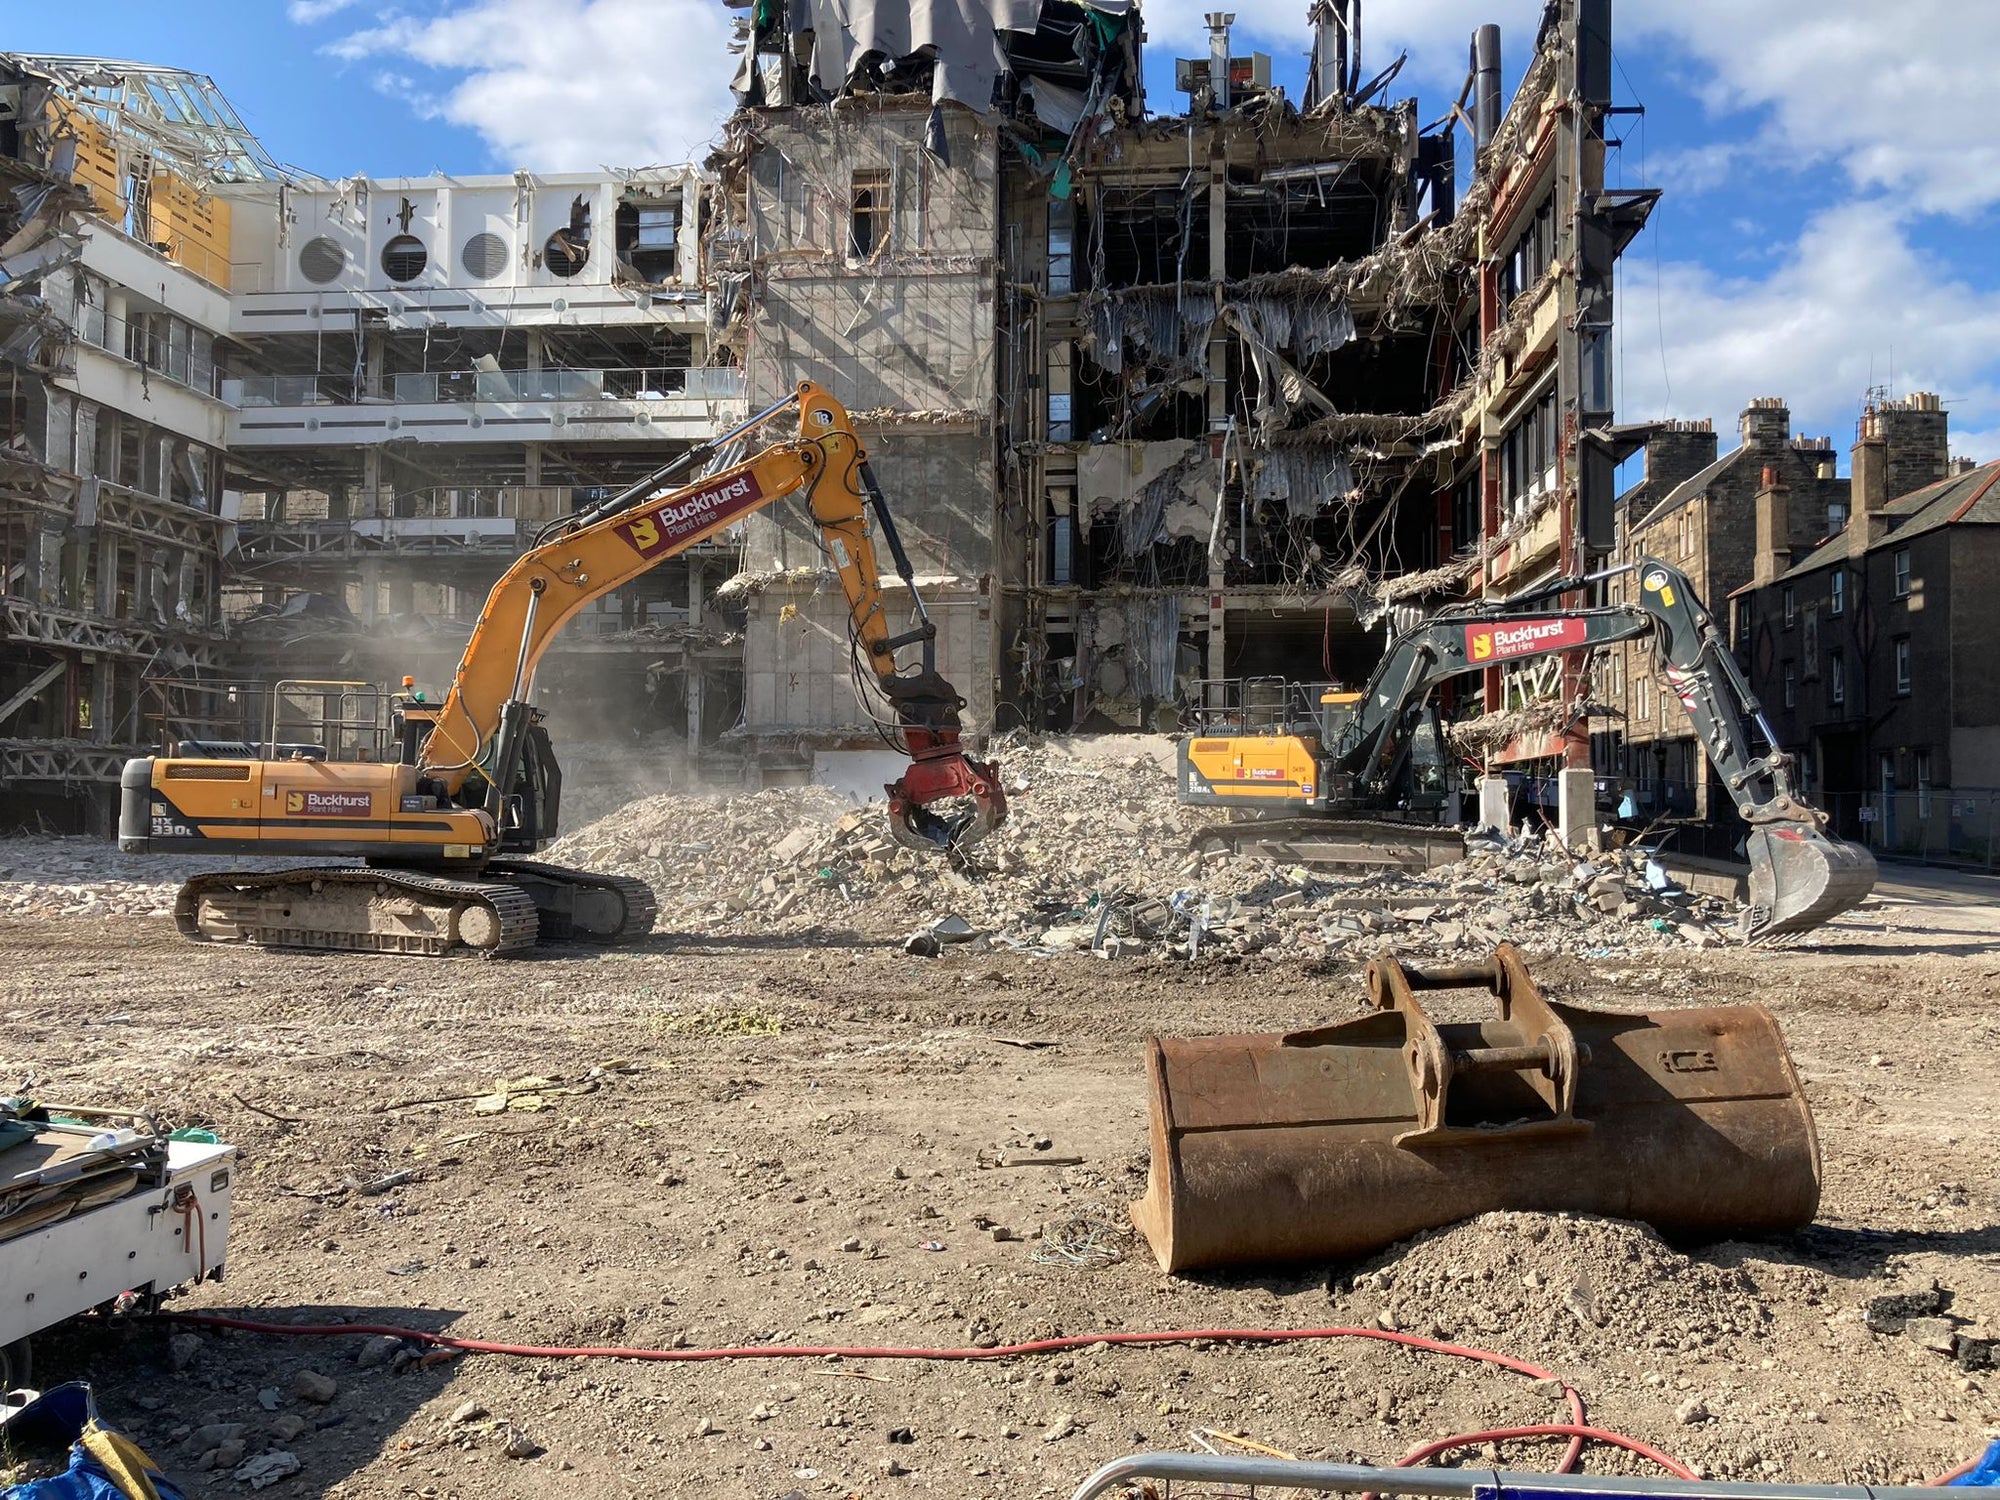 Edinburgh RBS Demolition Image